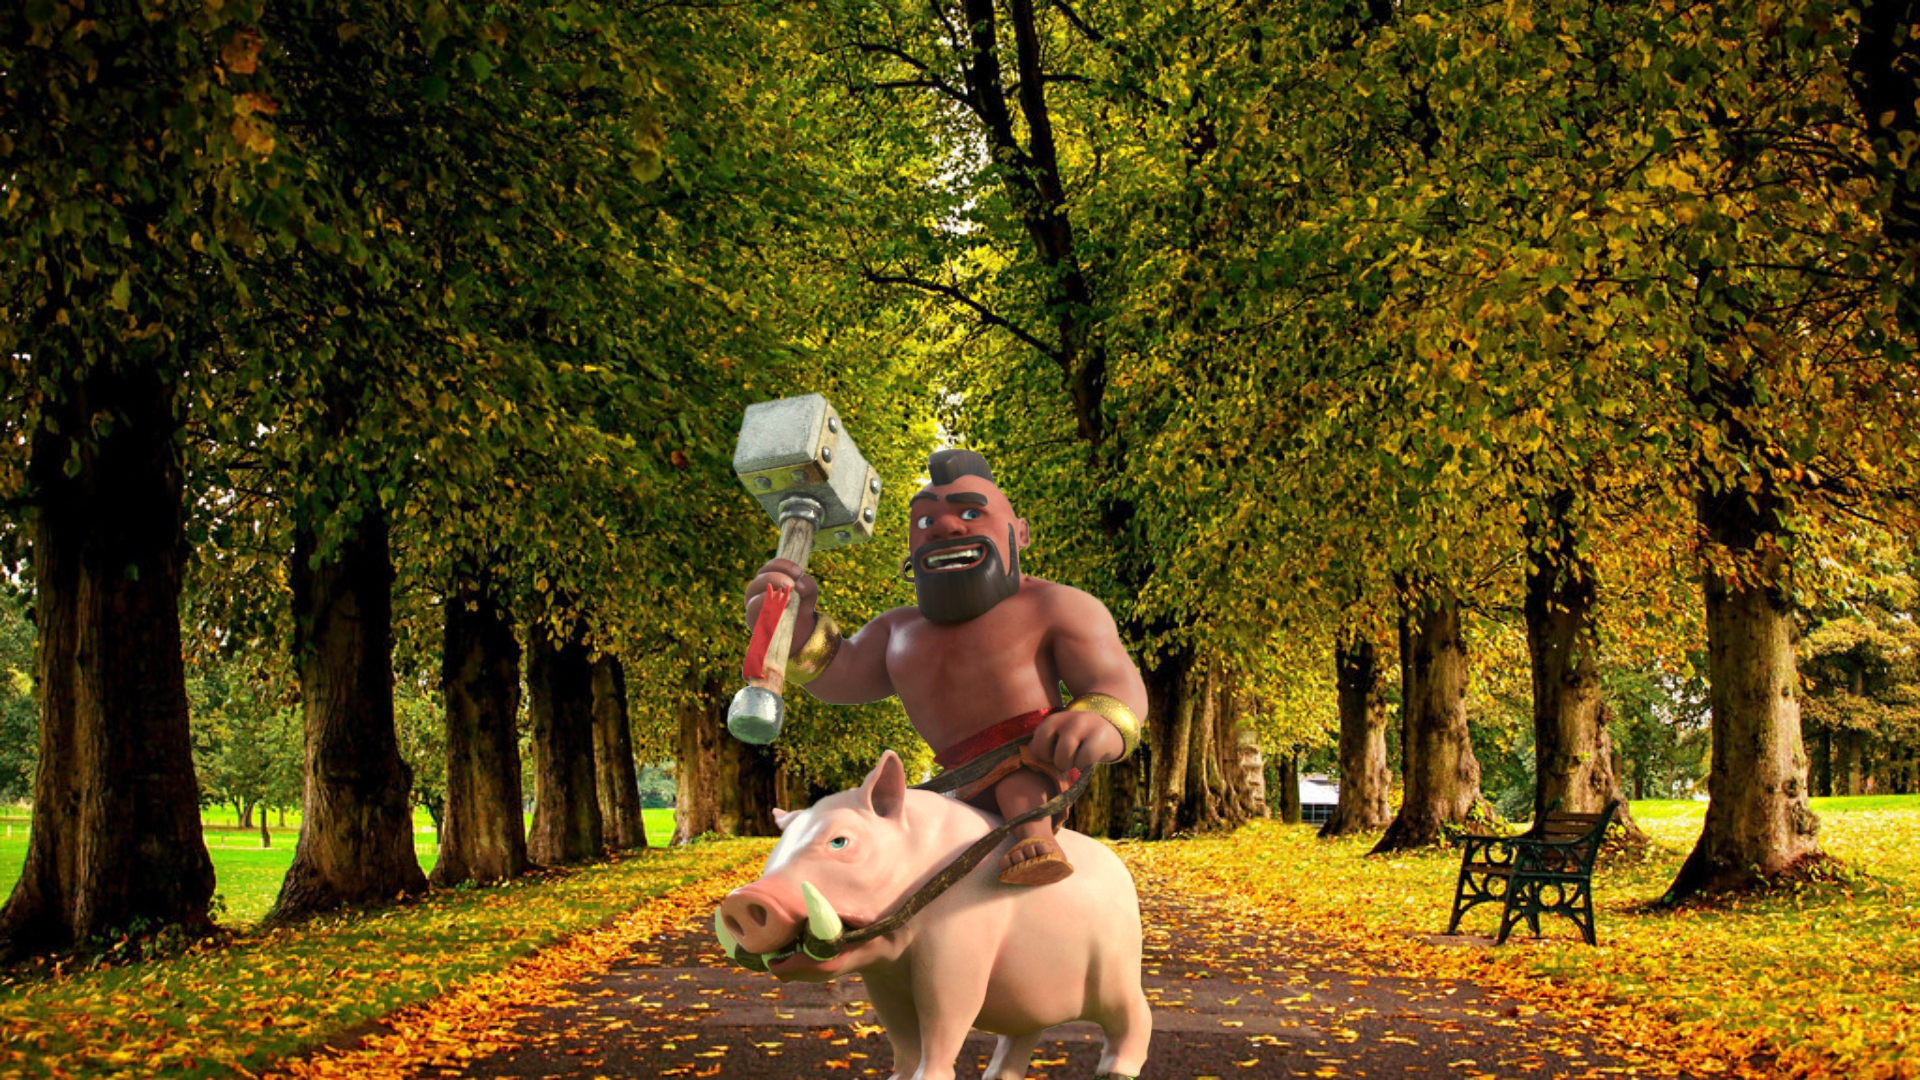 Hog Rider in a forest by neggasempai